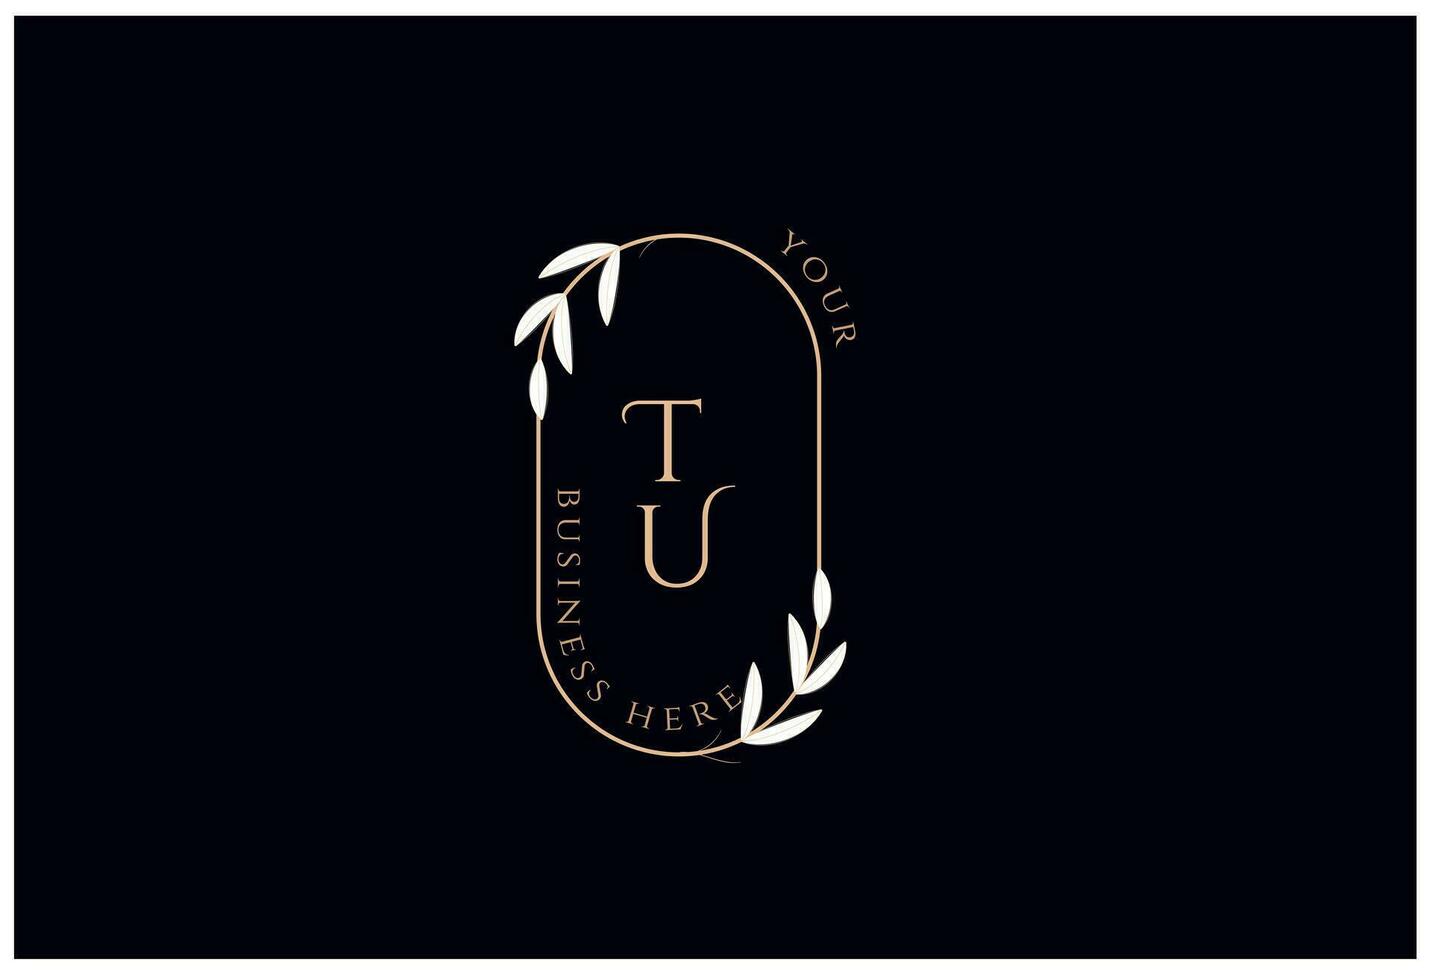 TU vector logo with wedding ceremony for branding design